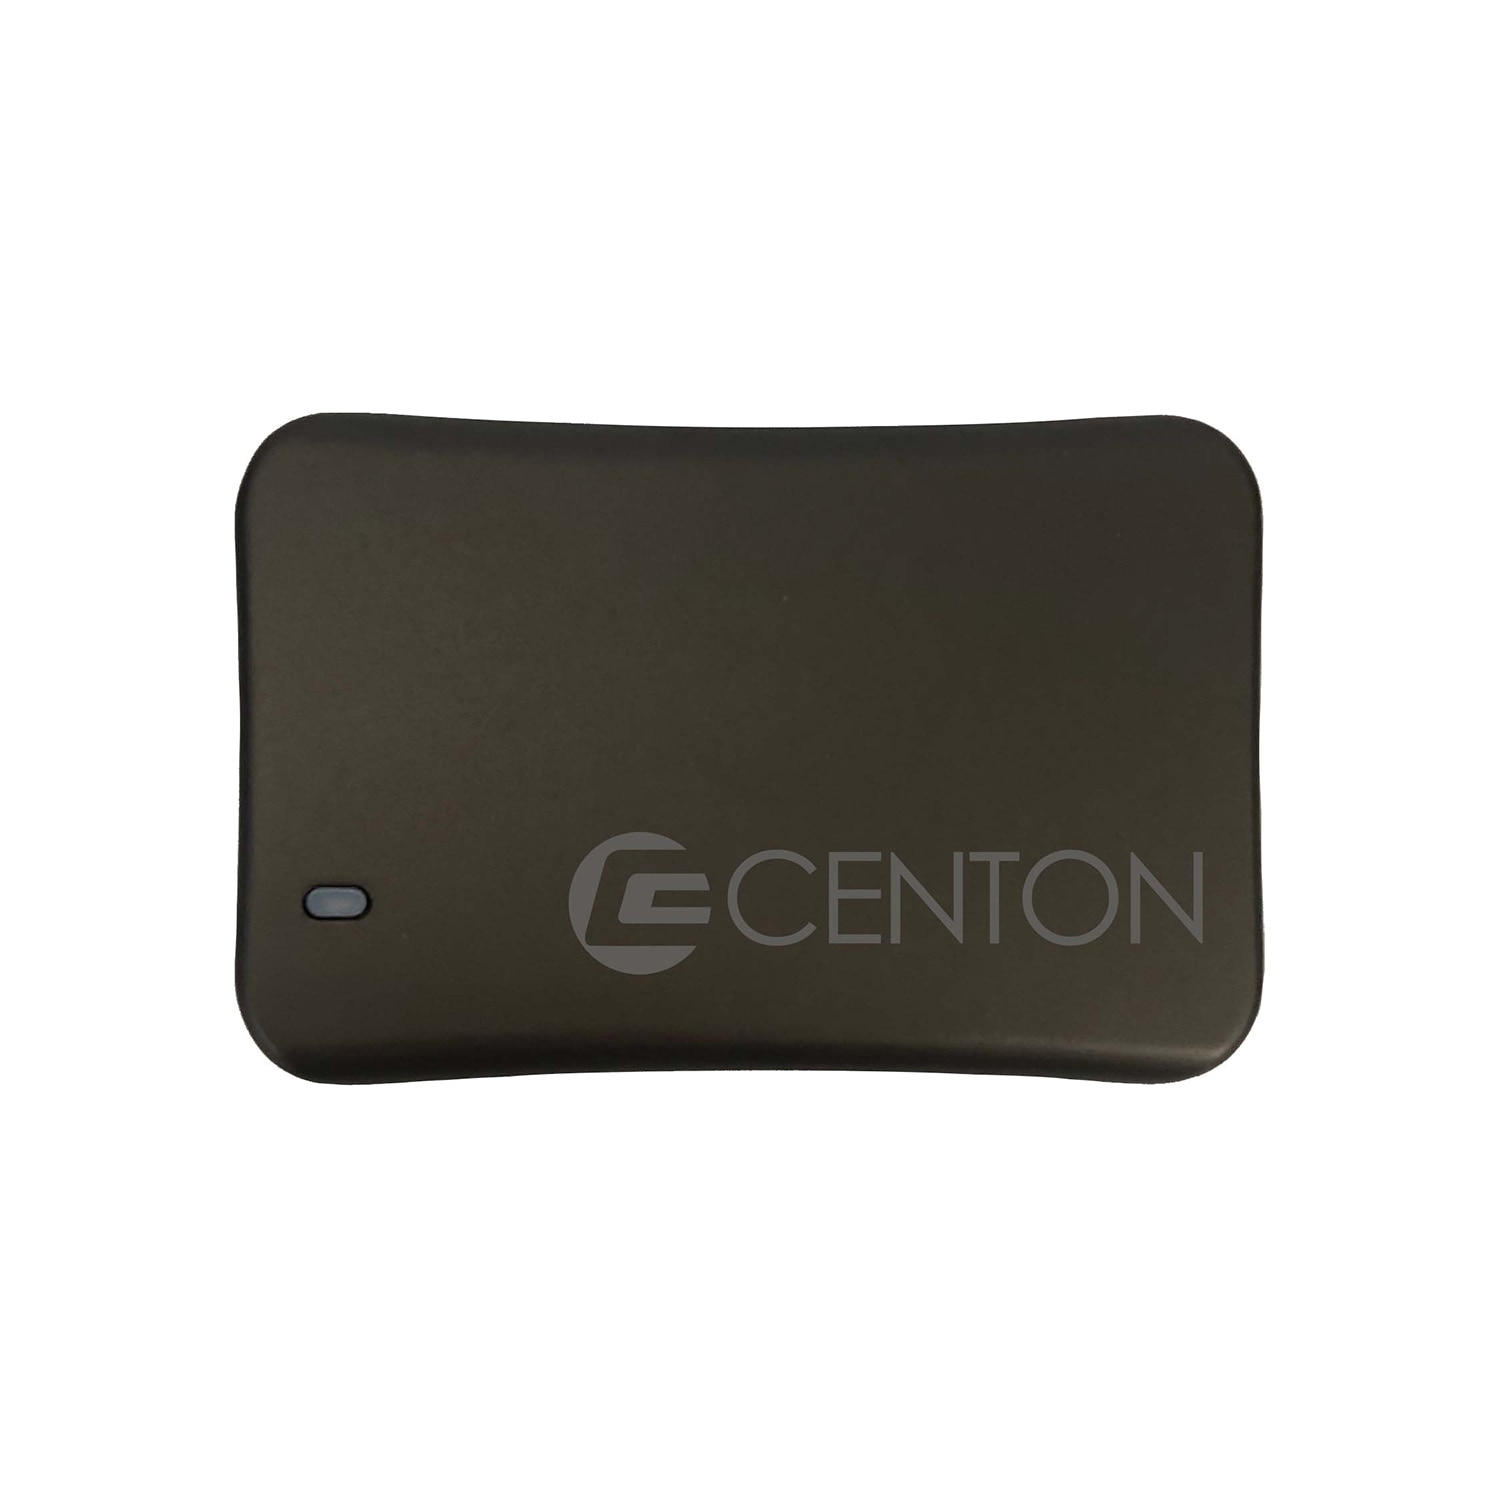 Centon External SSD (Black), USB 3.2 Gen 2, 500GB